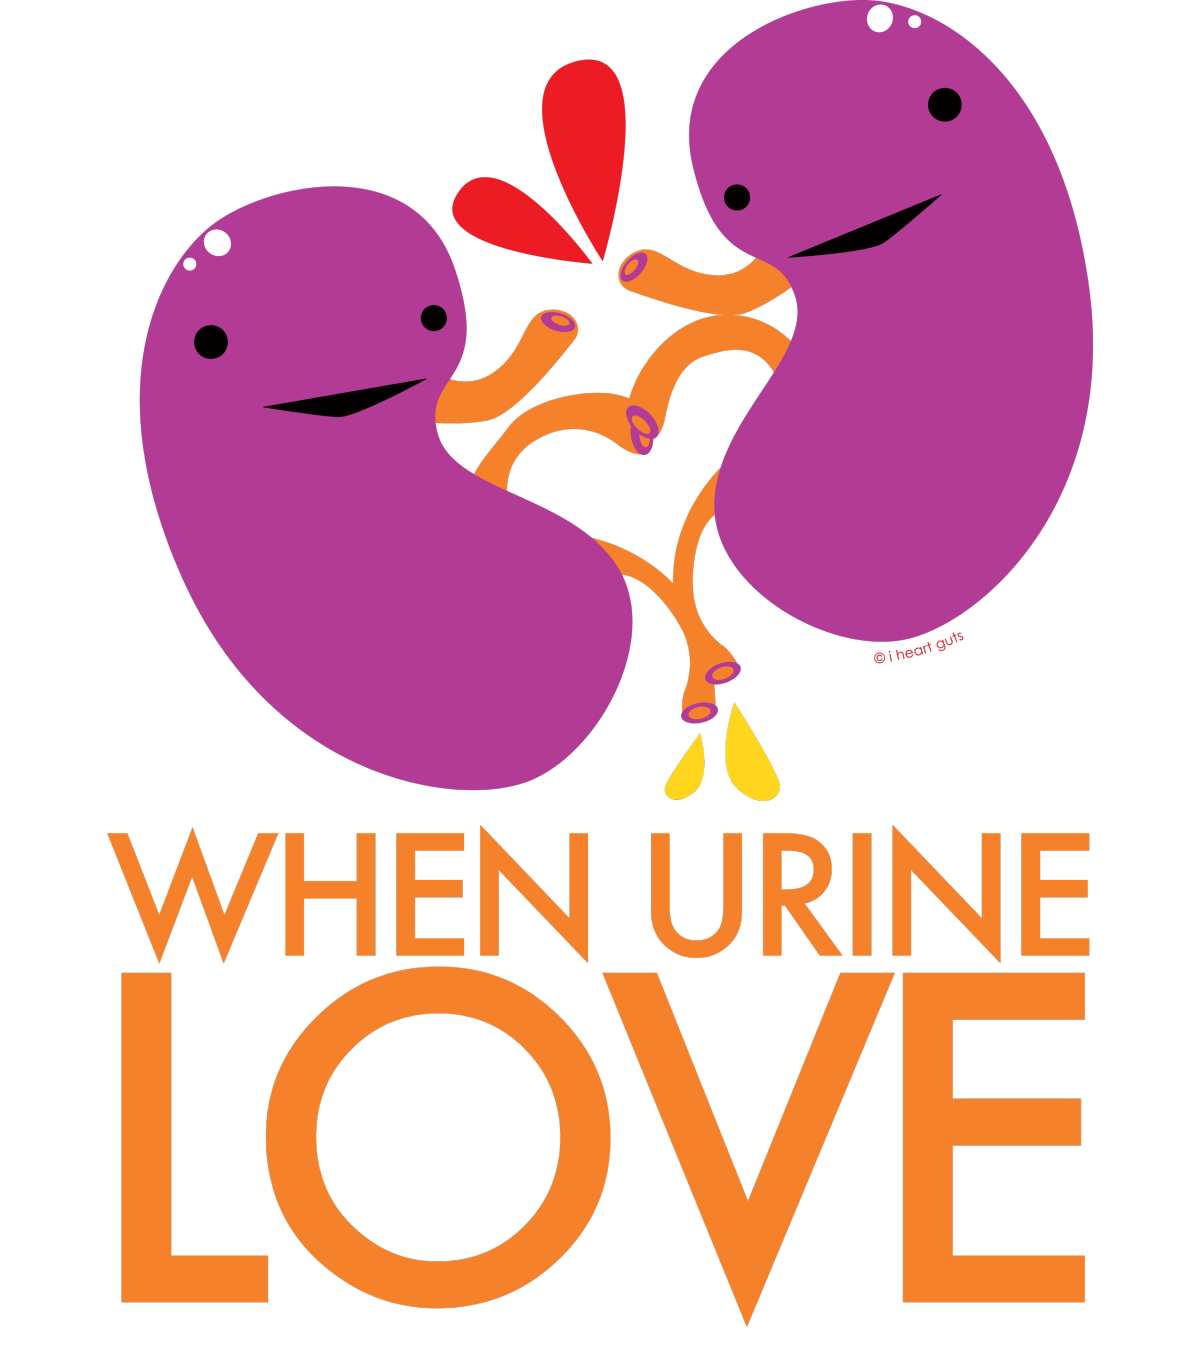 kidney clipart love